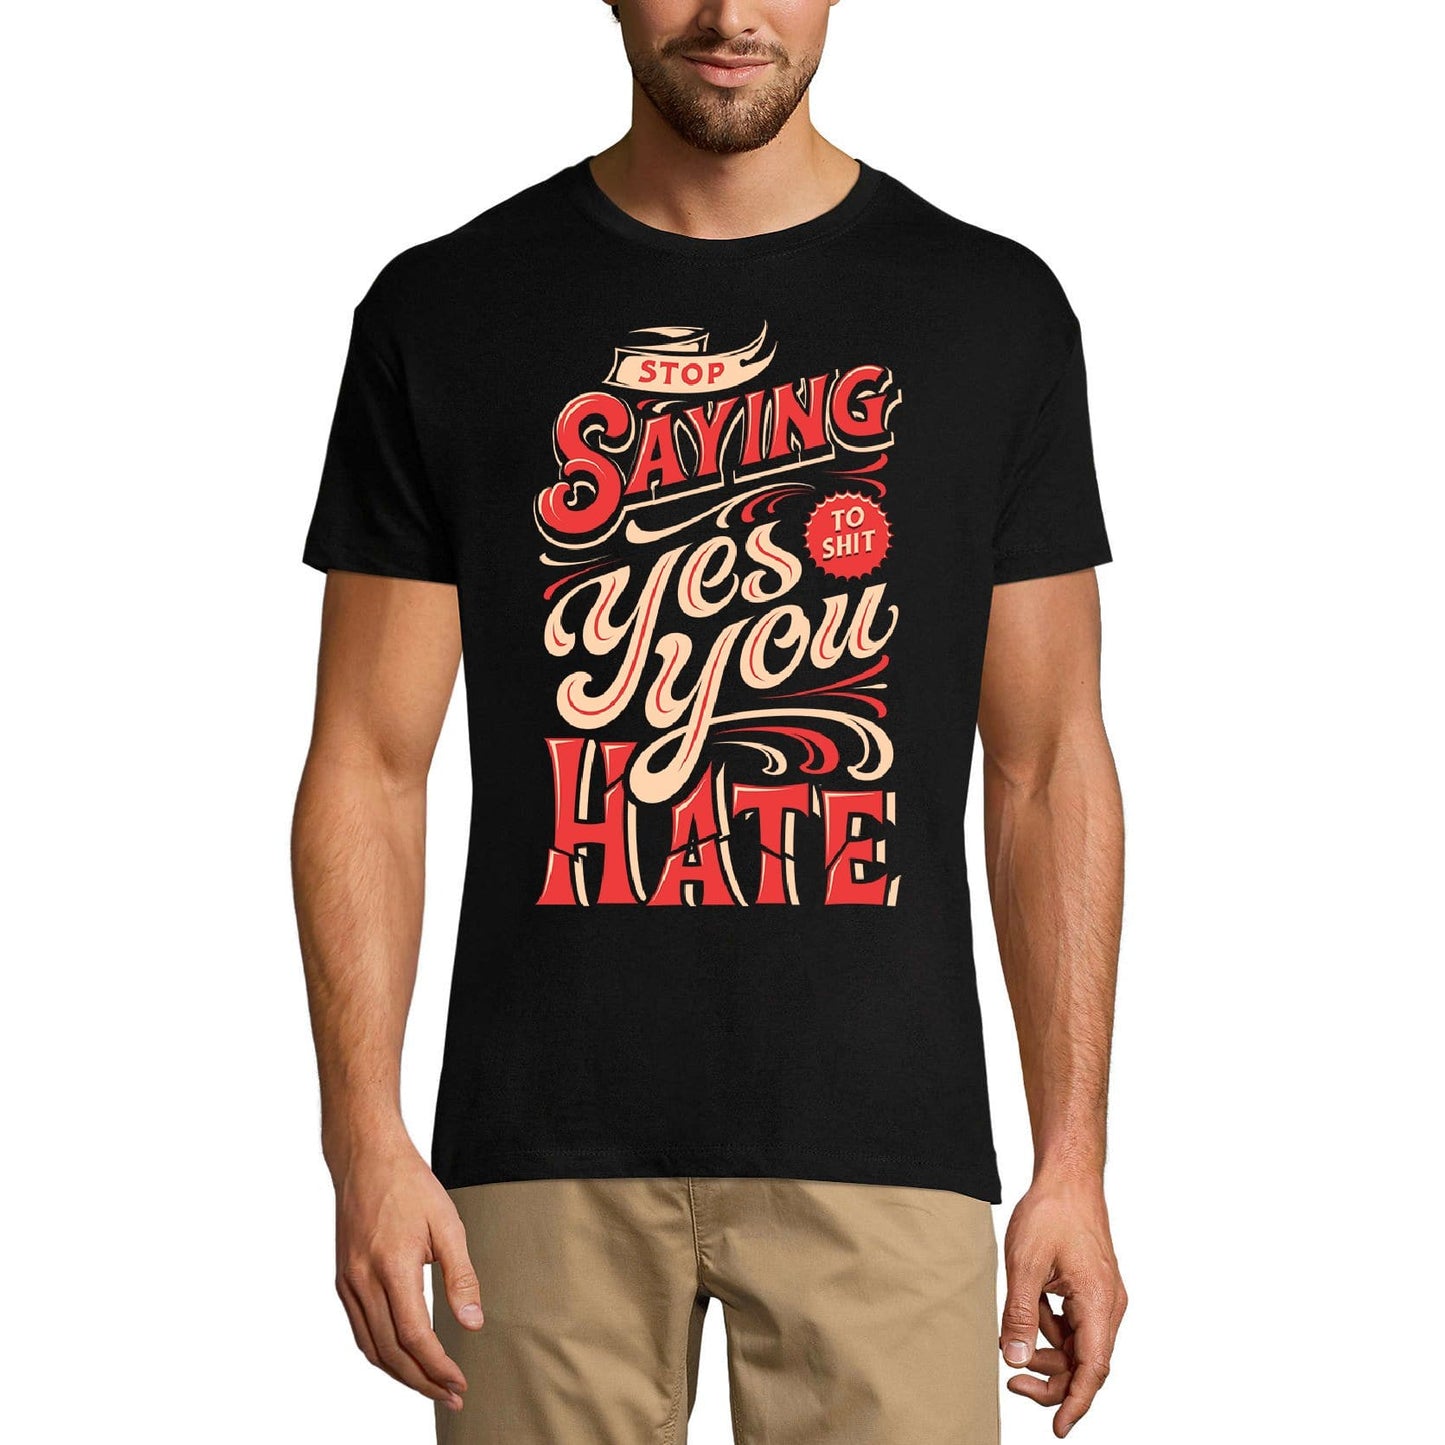 ULTRABASIC Men's T-Shirt Stop saying yes to shit you hate - Short Sleeve Tee shirt